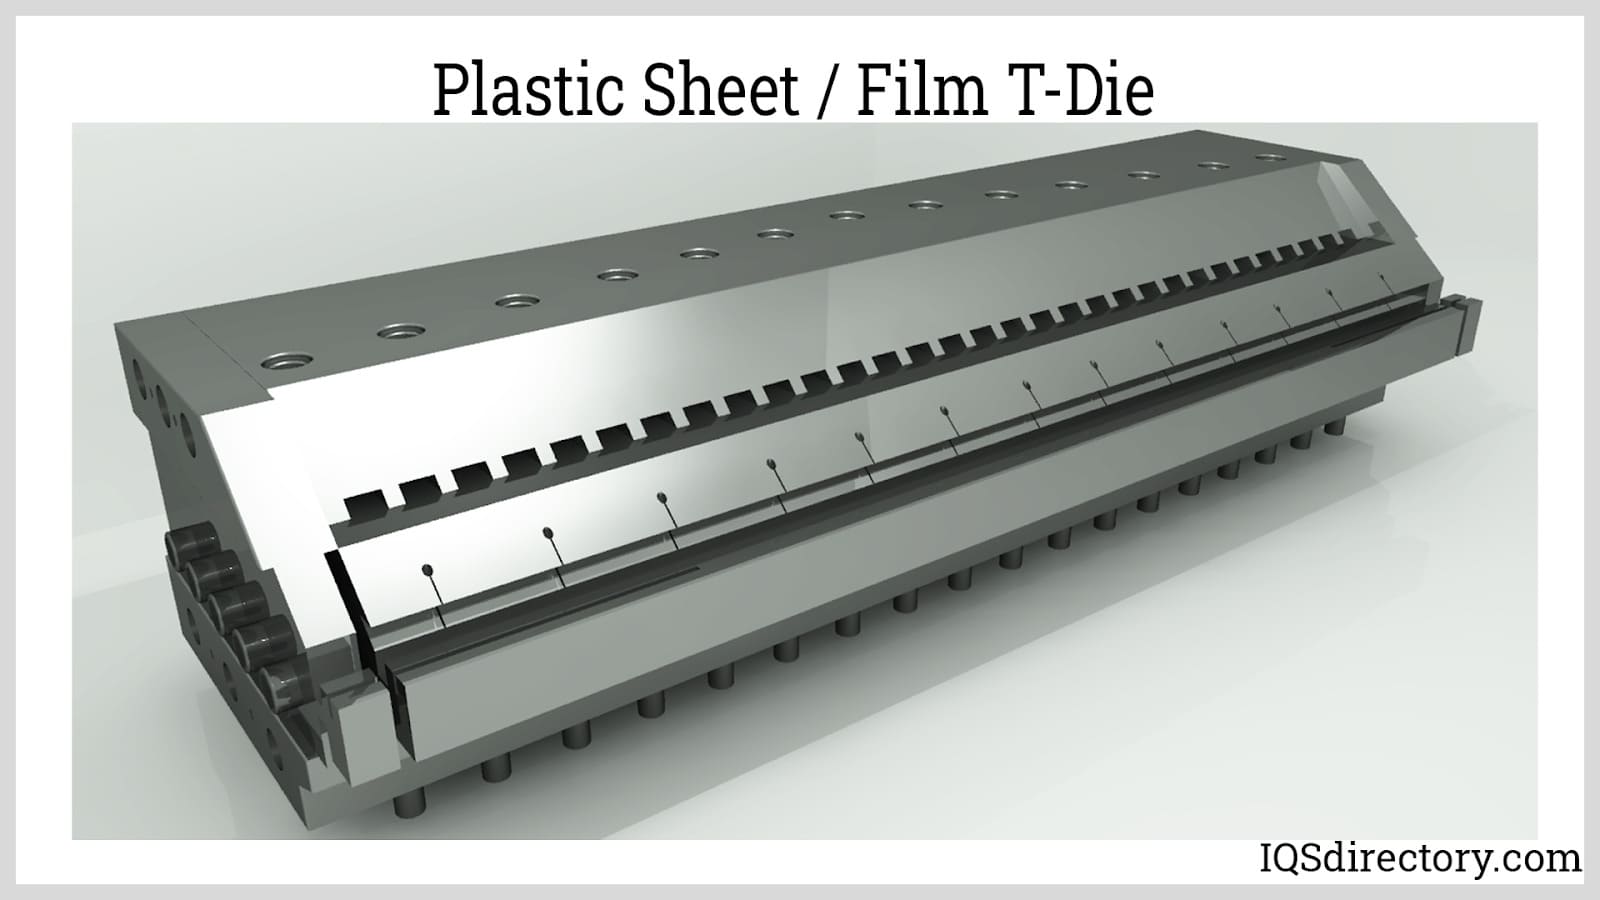 https://www.iqsdirectory.com/articles/plastic/plastic-extrusion/plastic-sheet-film-t-die.jpg